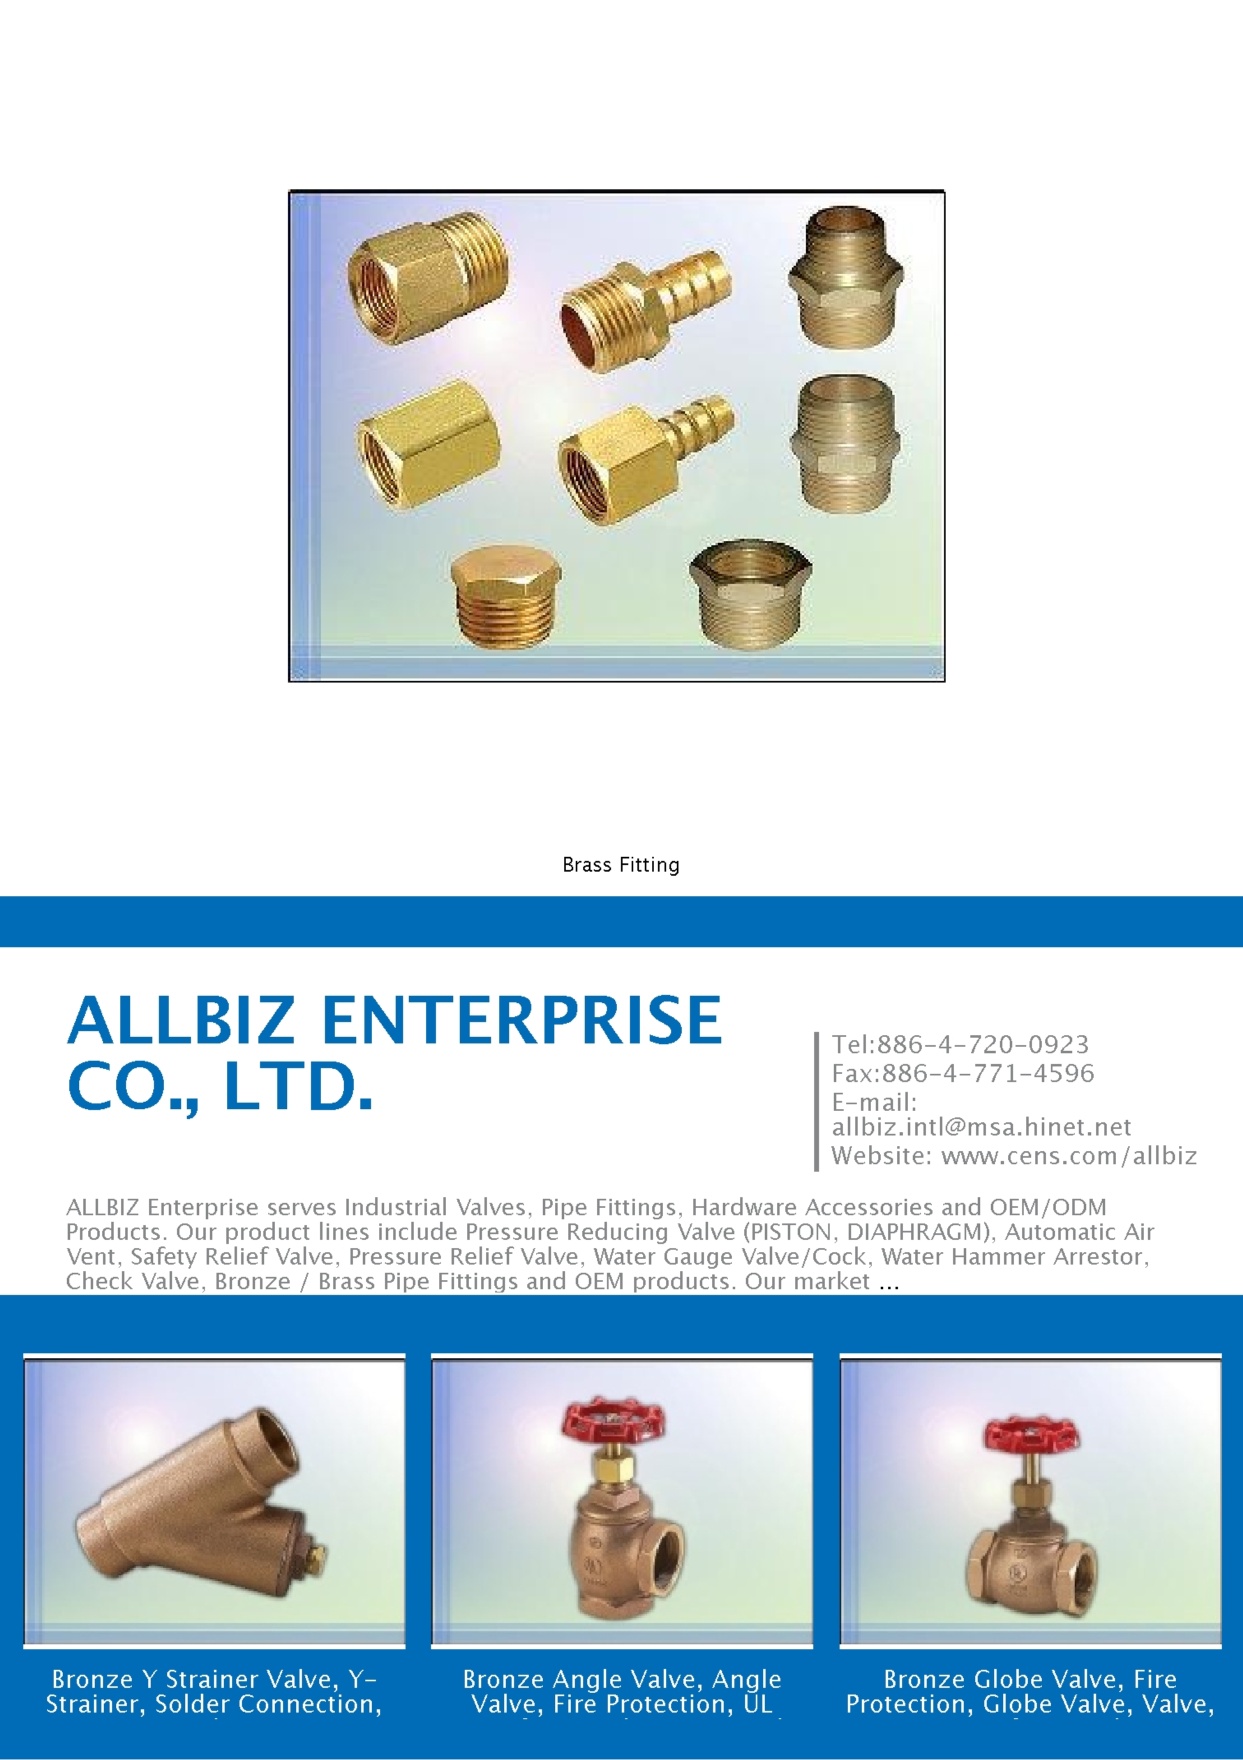 ALLBIZ ENTERPRISE CO., LTD.